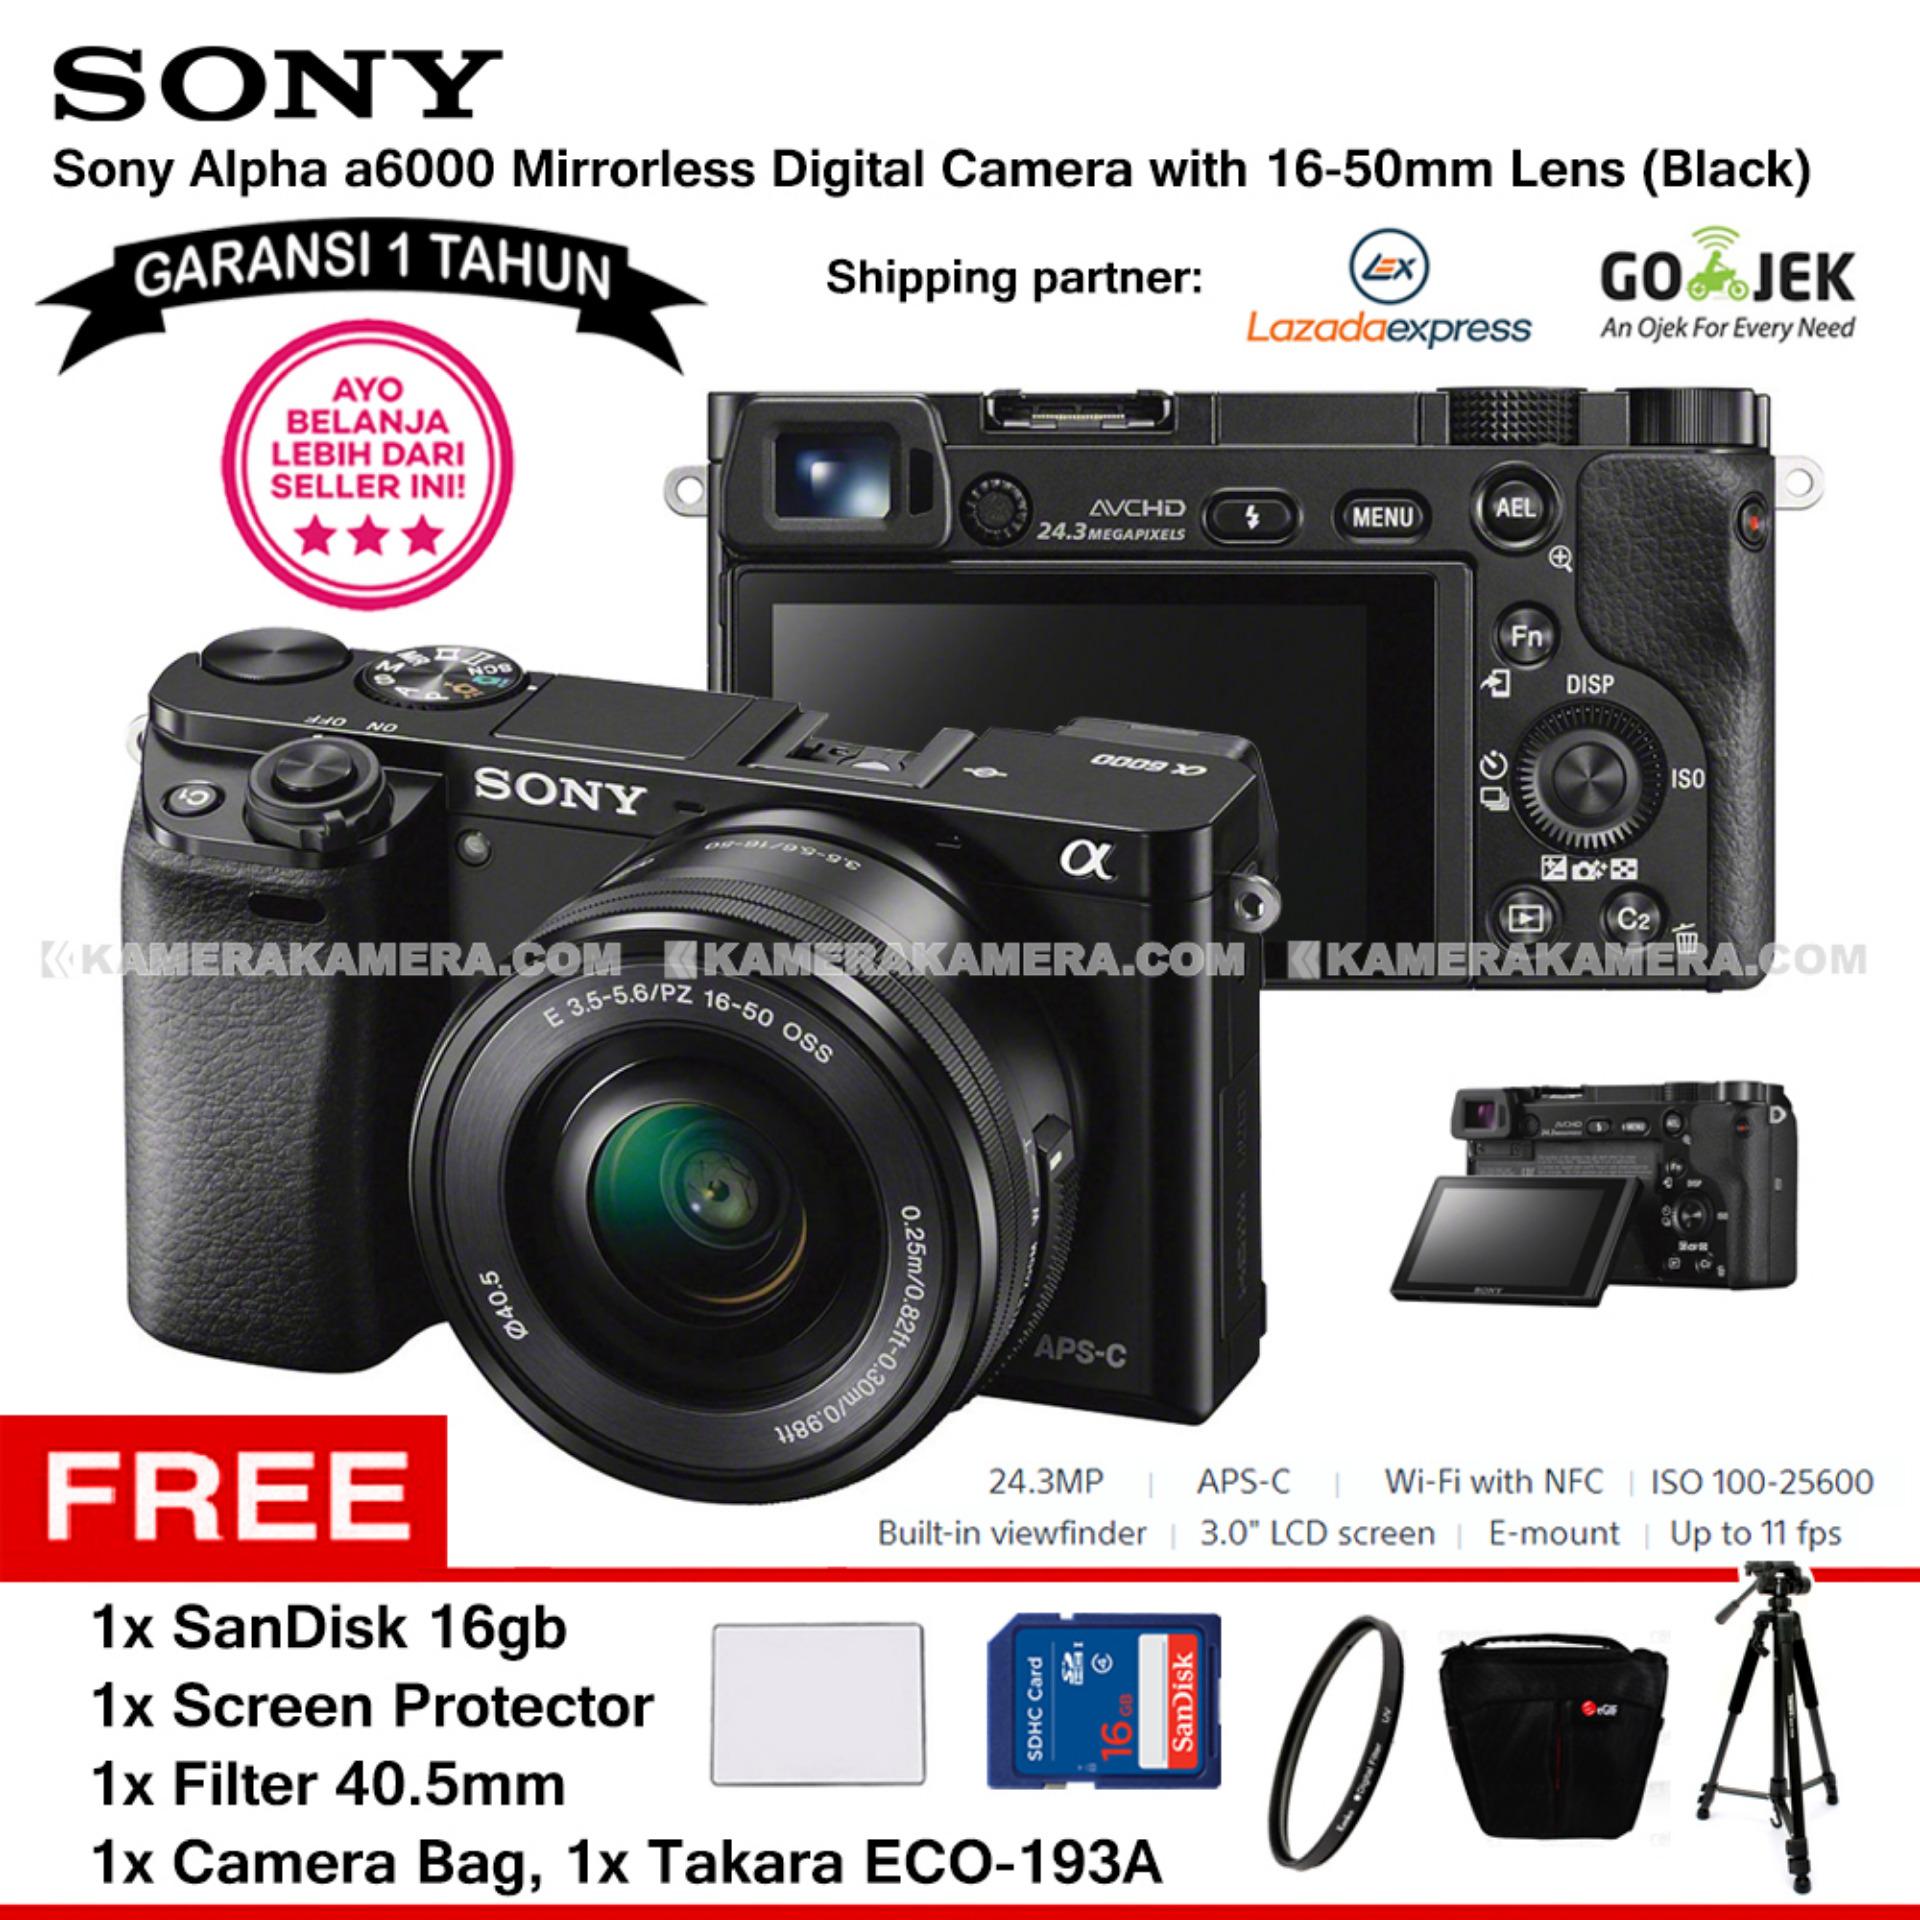 SONY Alpha 6000 Black with 16-50mm Lens Mirrorless Camera a6000 - WiFi 24.3MP Full HD (Garansi 1th) + SanDisk 16gb + Screen Guard + Filter 40.5mm + Camera Bag + Takara ECO-193A